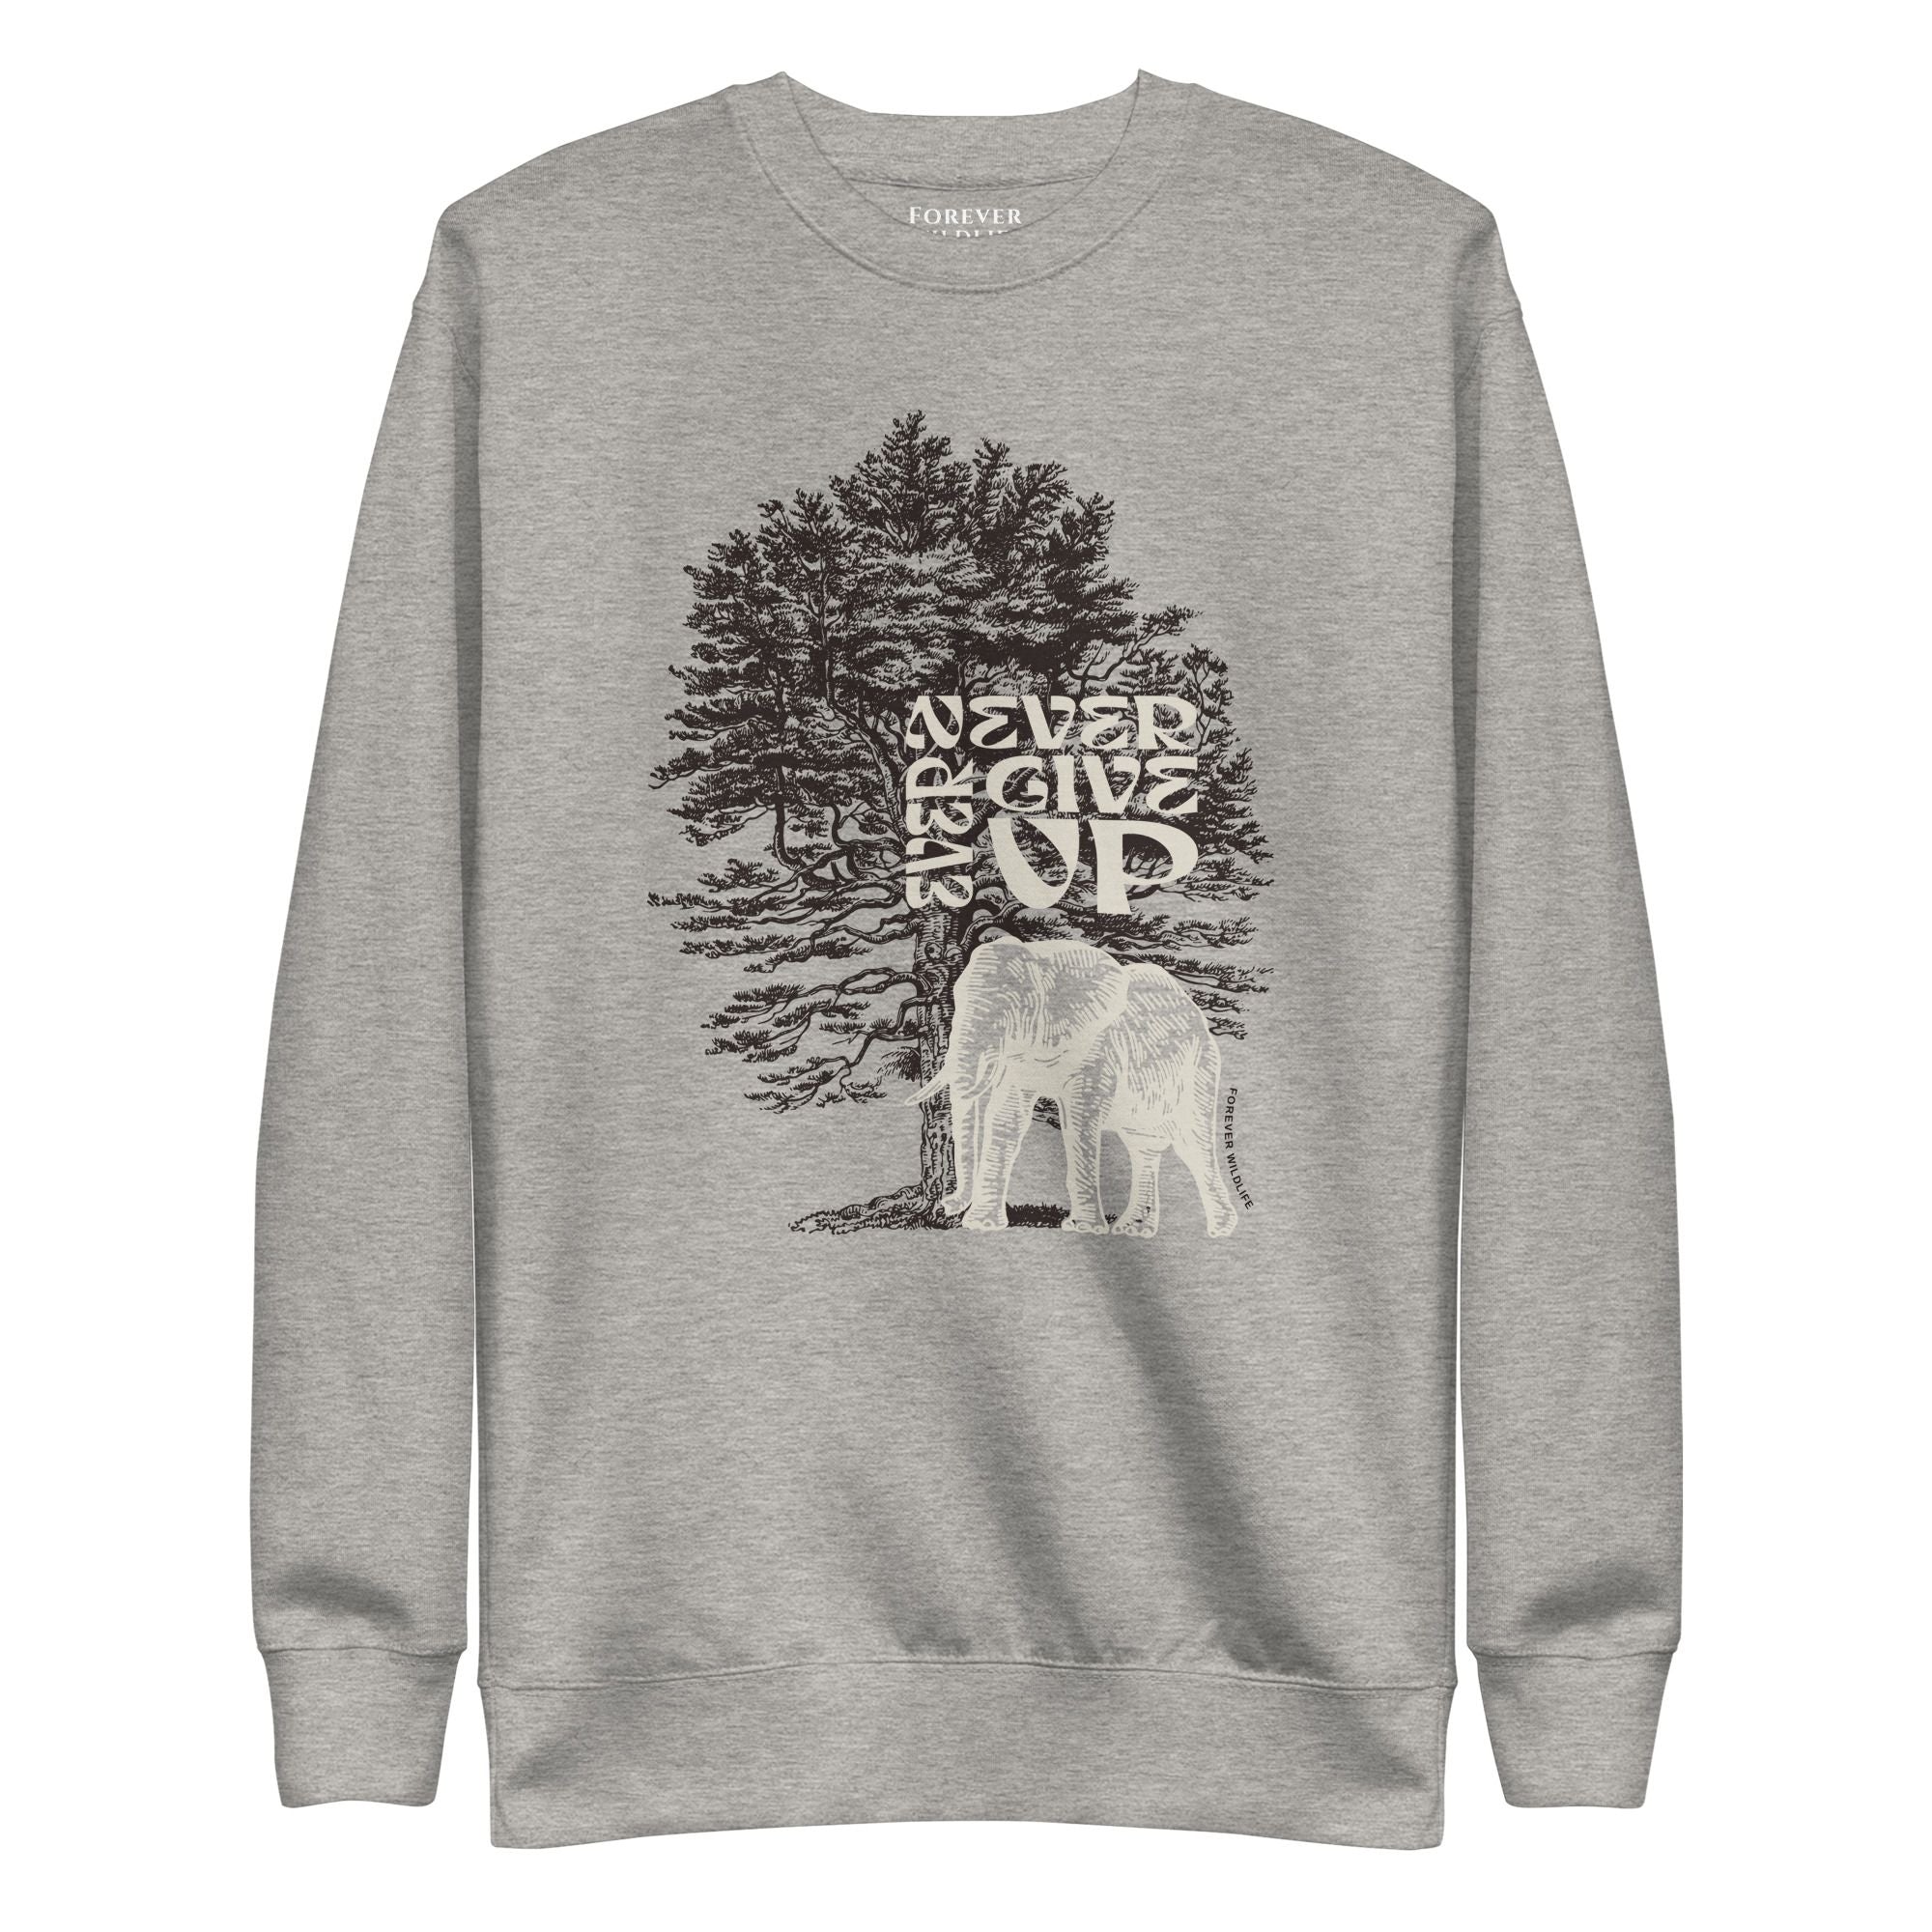 Elephant Sweatshirt in Grey-Premium Wildlife Animal Inspiration Sweatshirt Design with 'Never Ever Give Up' text, part of Wildlife Sweatshirts & Clothing from Forever Wildlife.